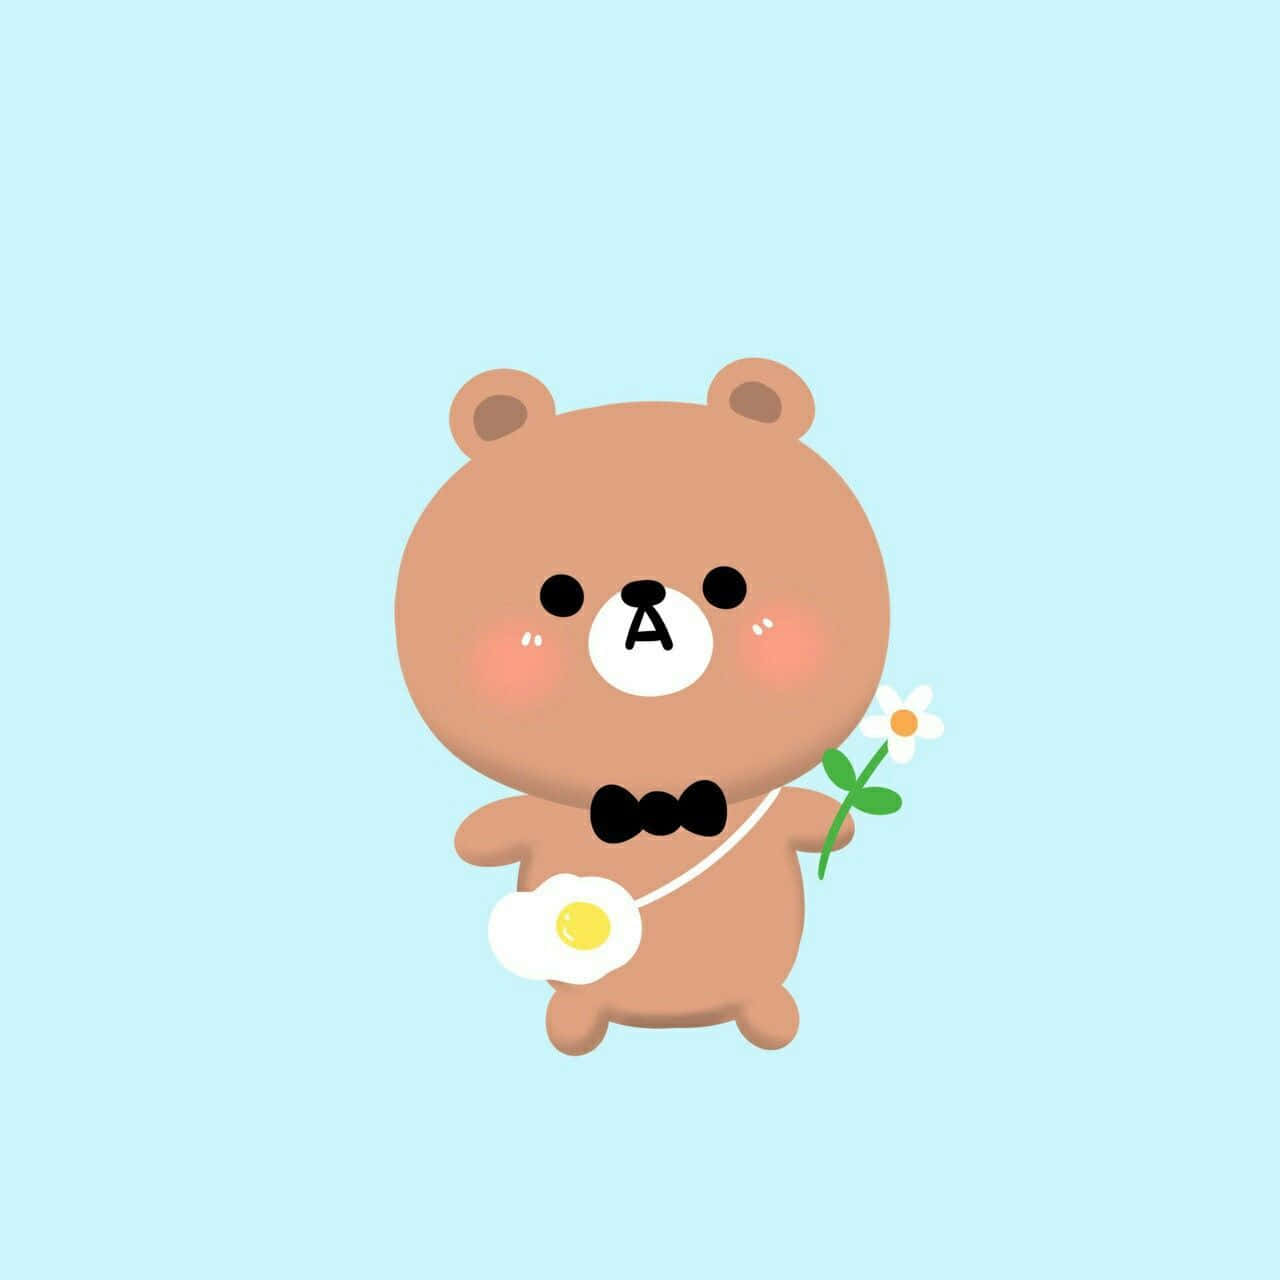 Cute Kawaii Bear illustration of a lovable, cuddly teddy bear with a bow tie Wallpaper